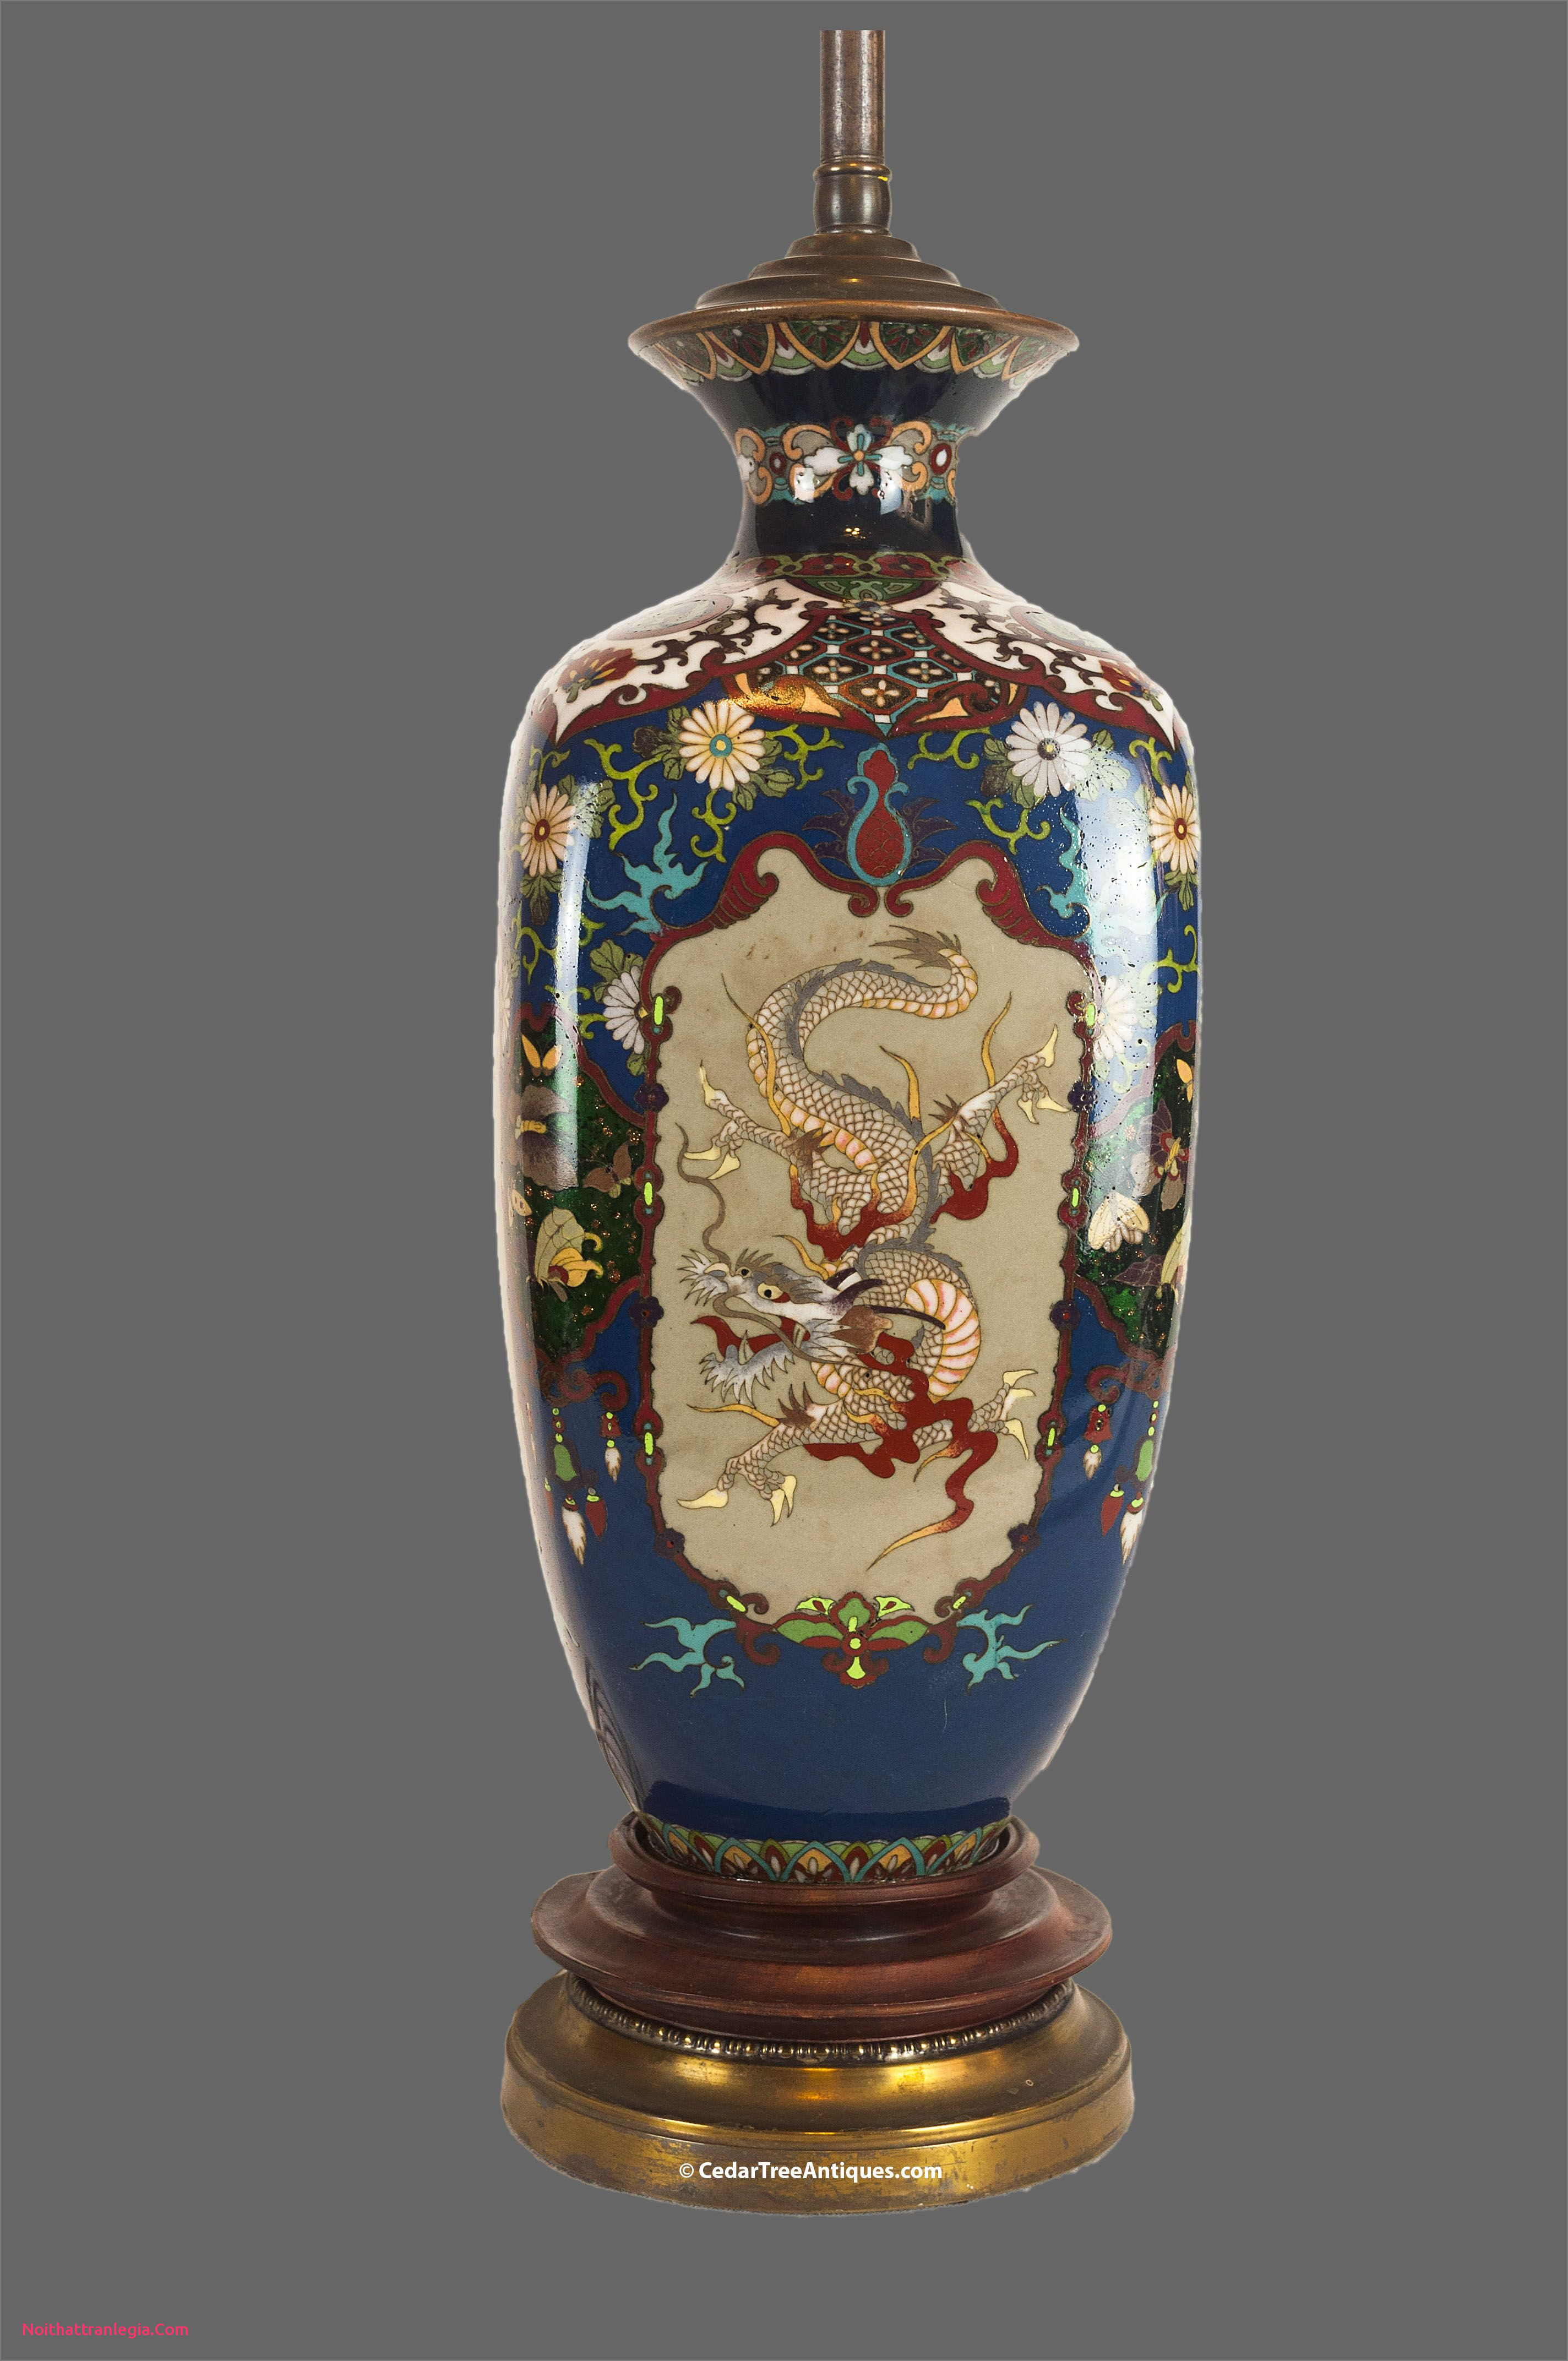 11 Lovely Antique Blue Glass Vase 2024 free download antique blue glass vase of 20 chinese antique vase noithattranlegia vases design regarding japanese meiji period cloissone dragon vase mounted as a lamp